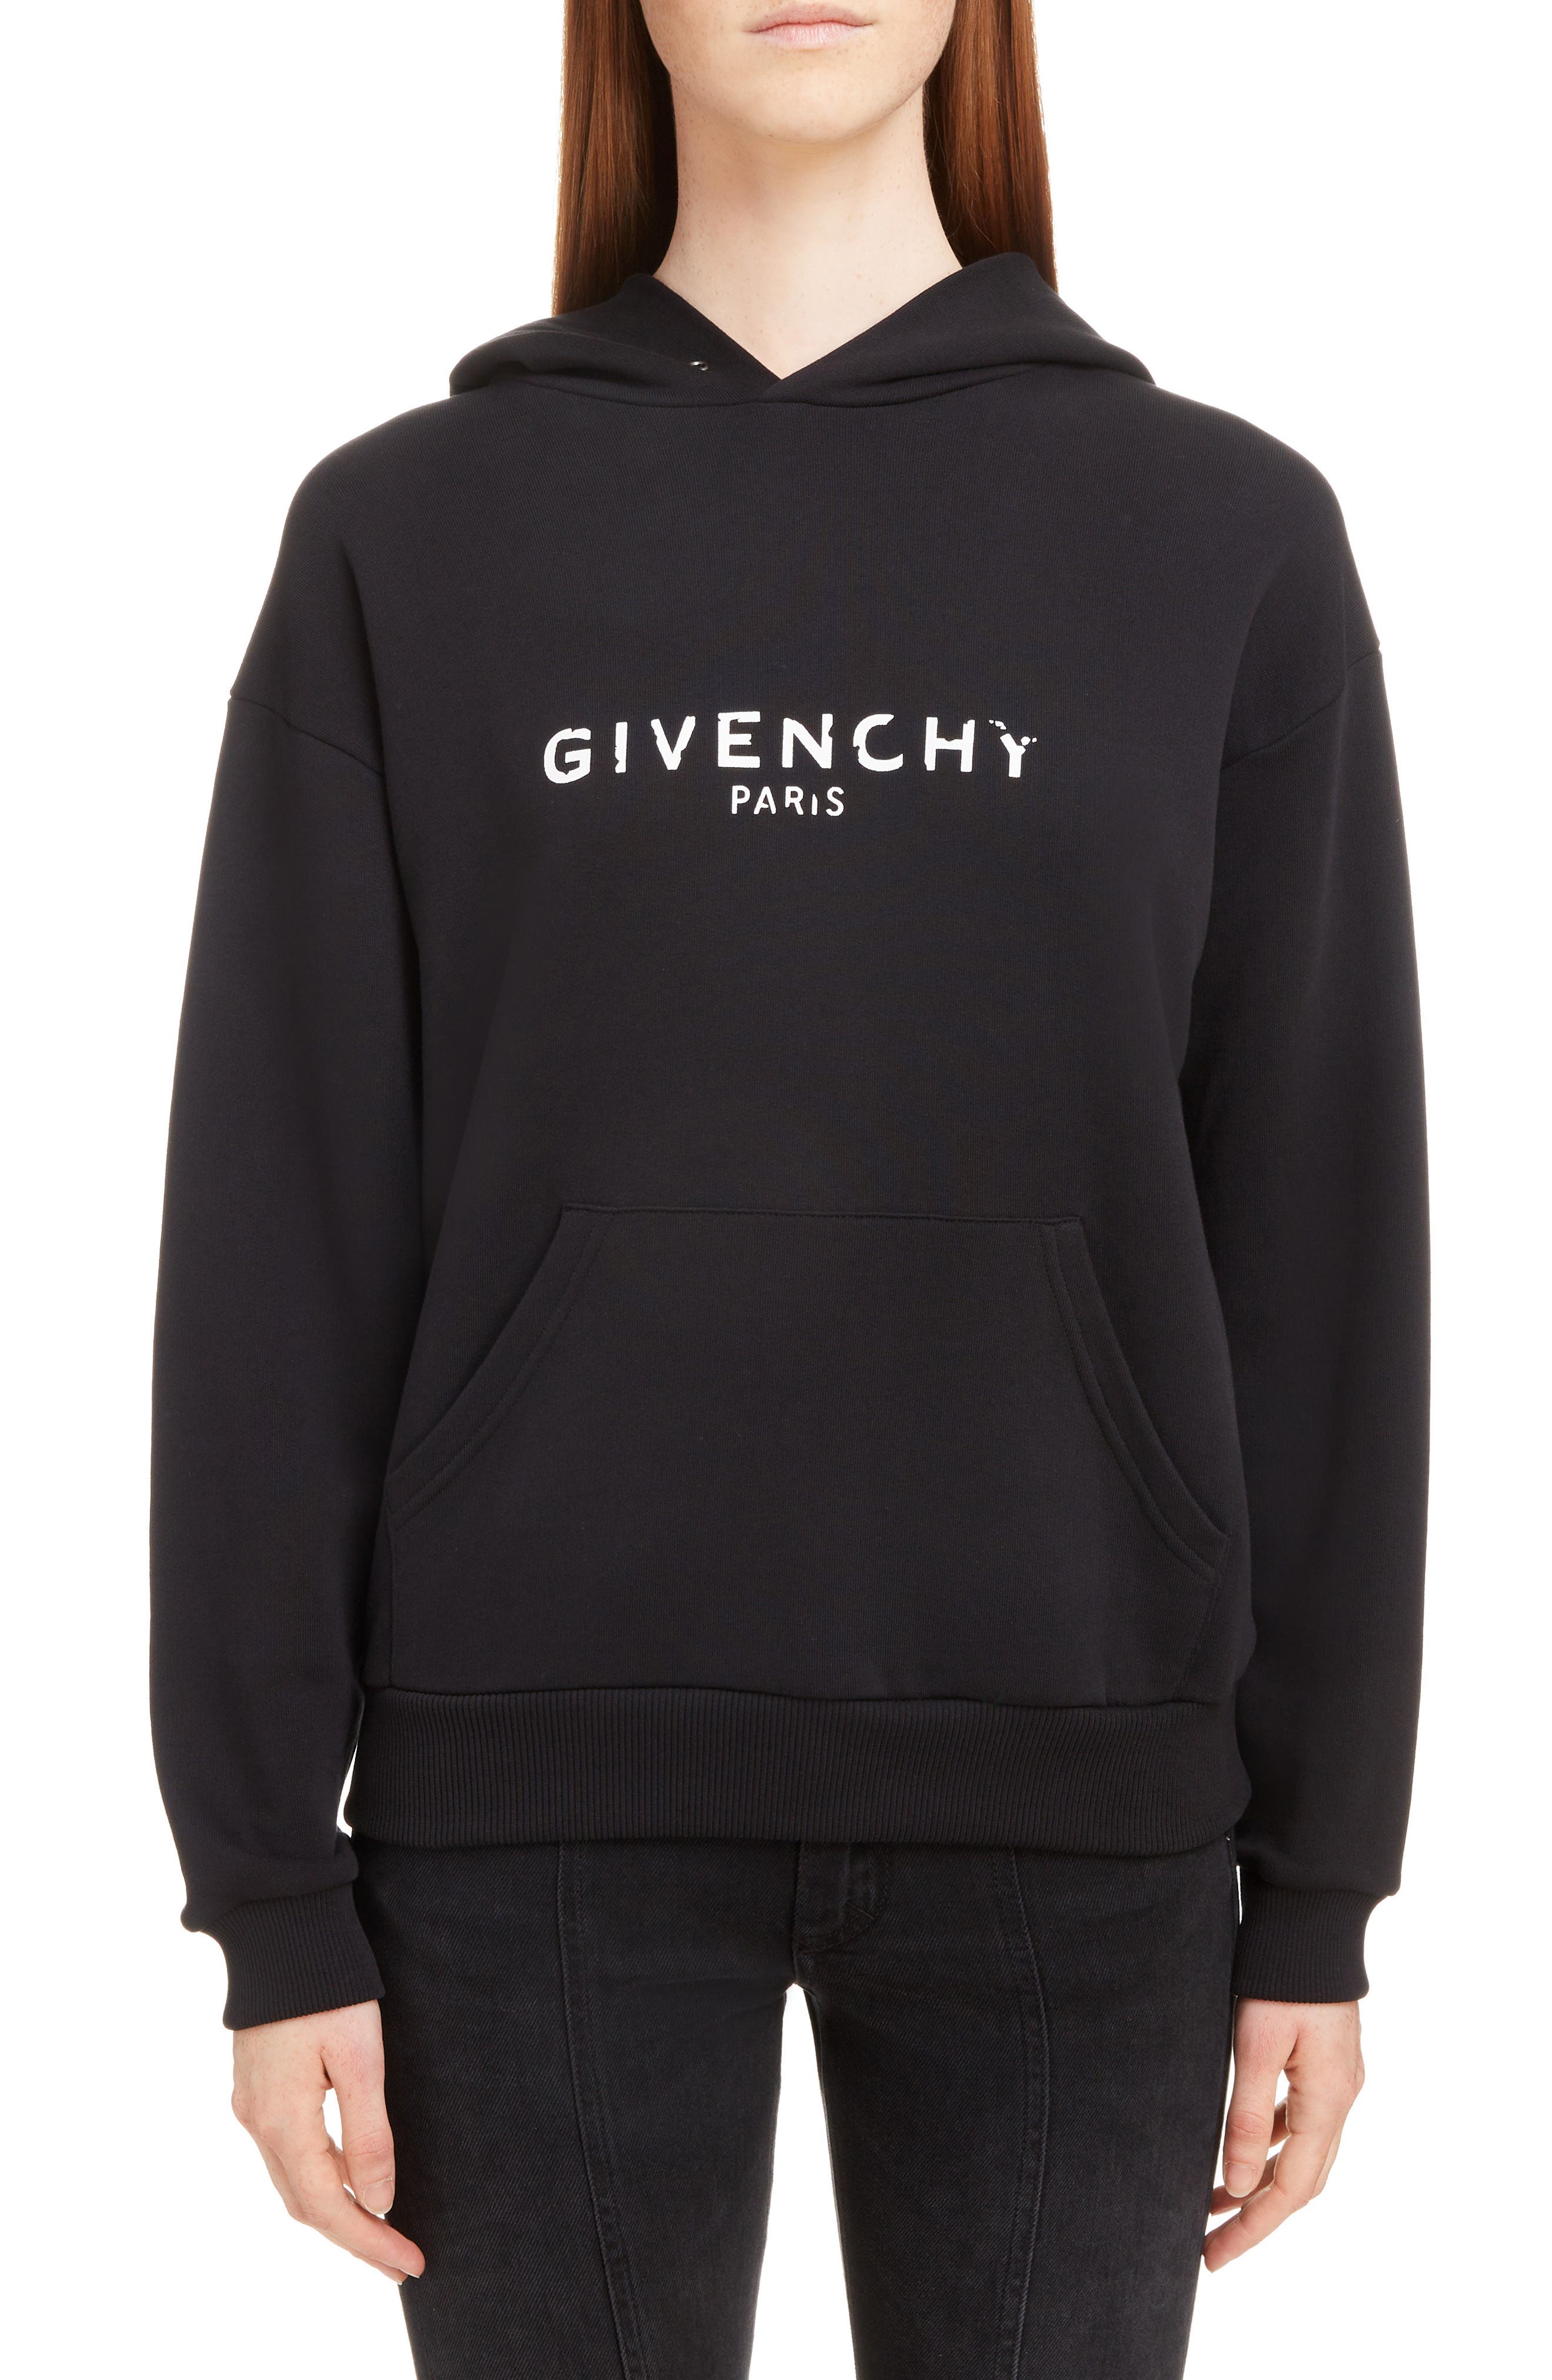 givenchy paris hoodie women's